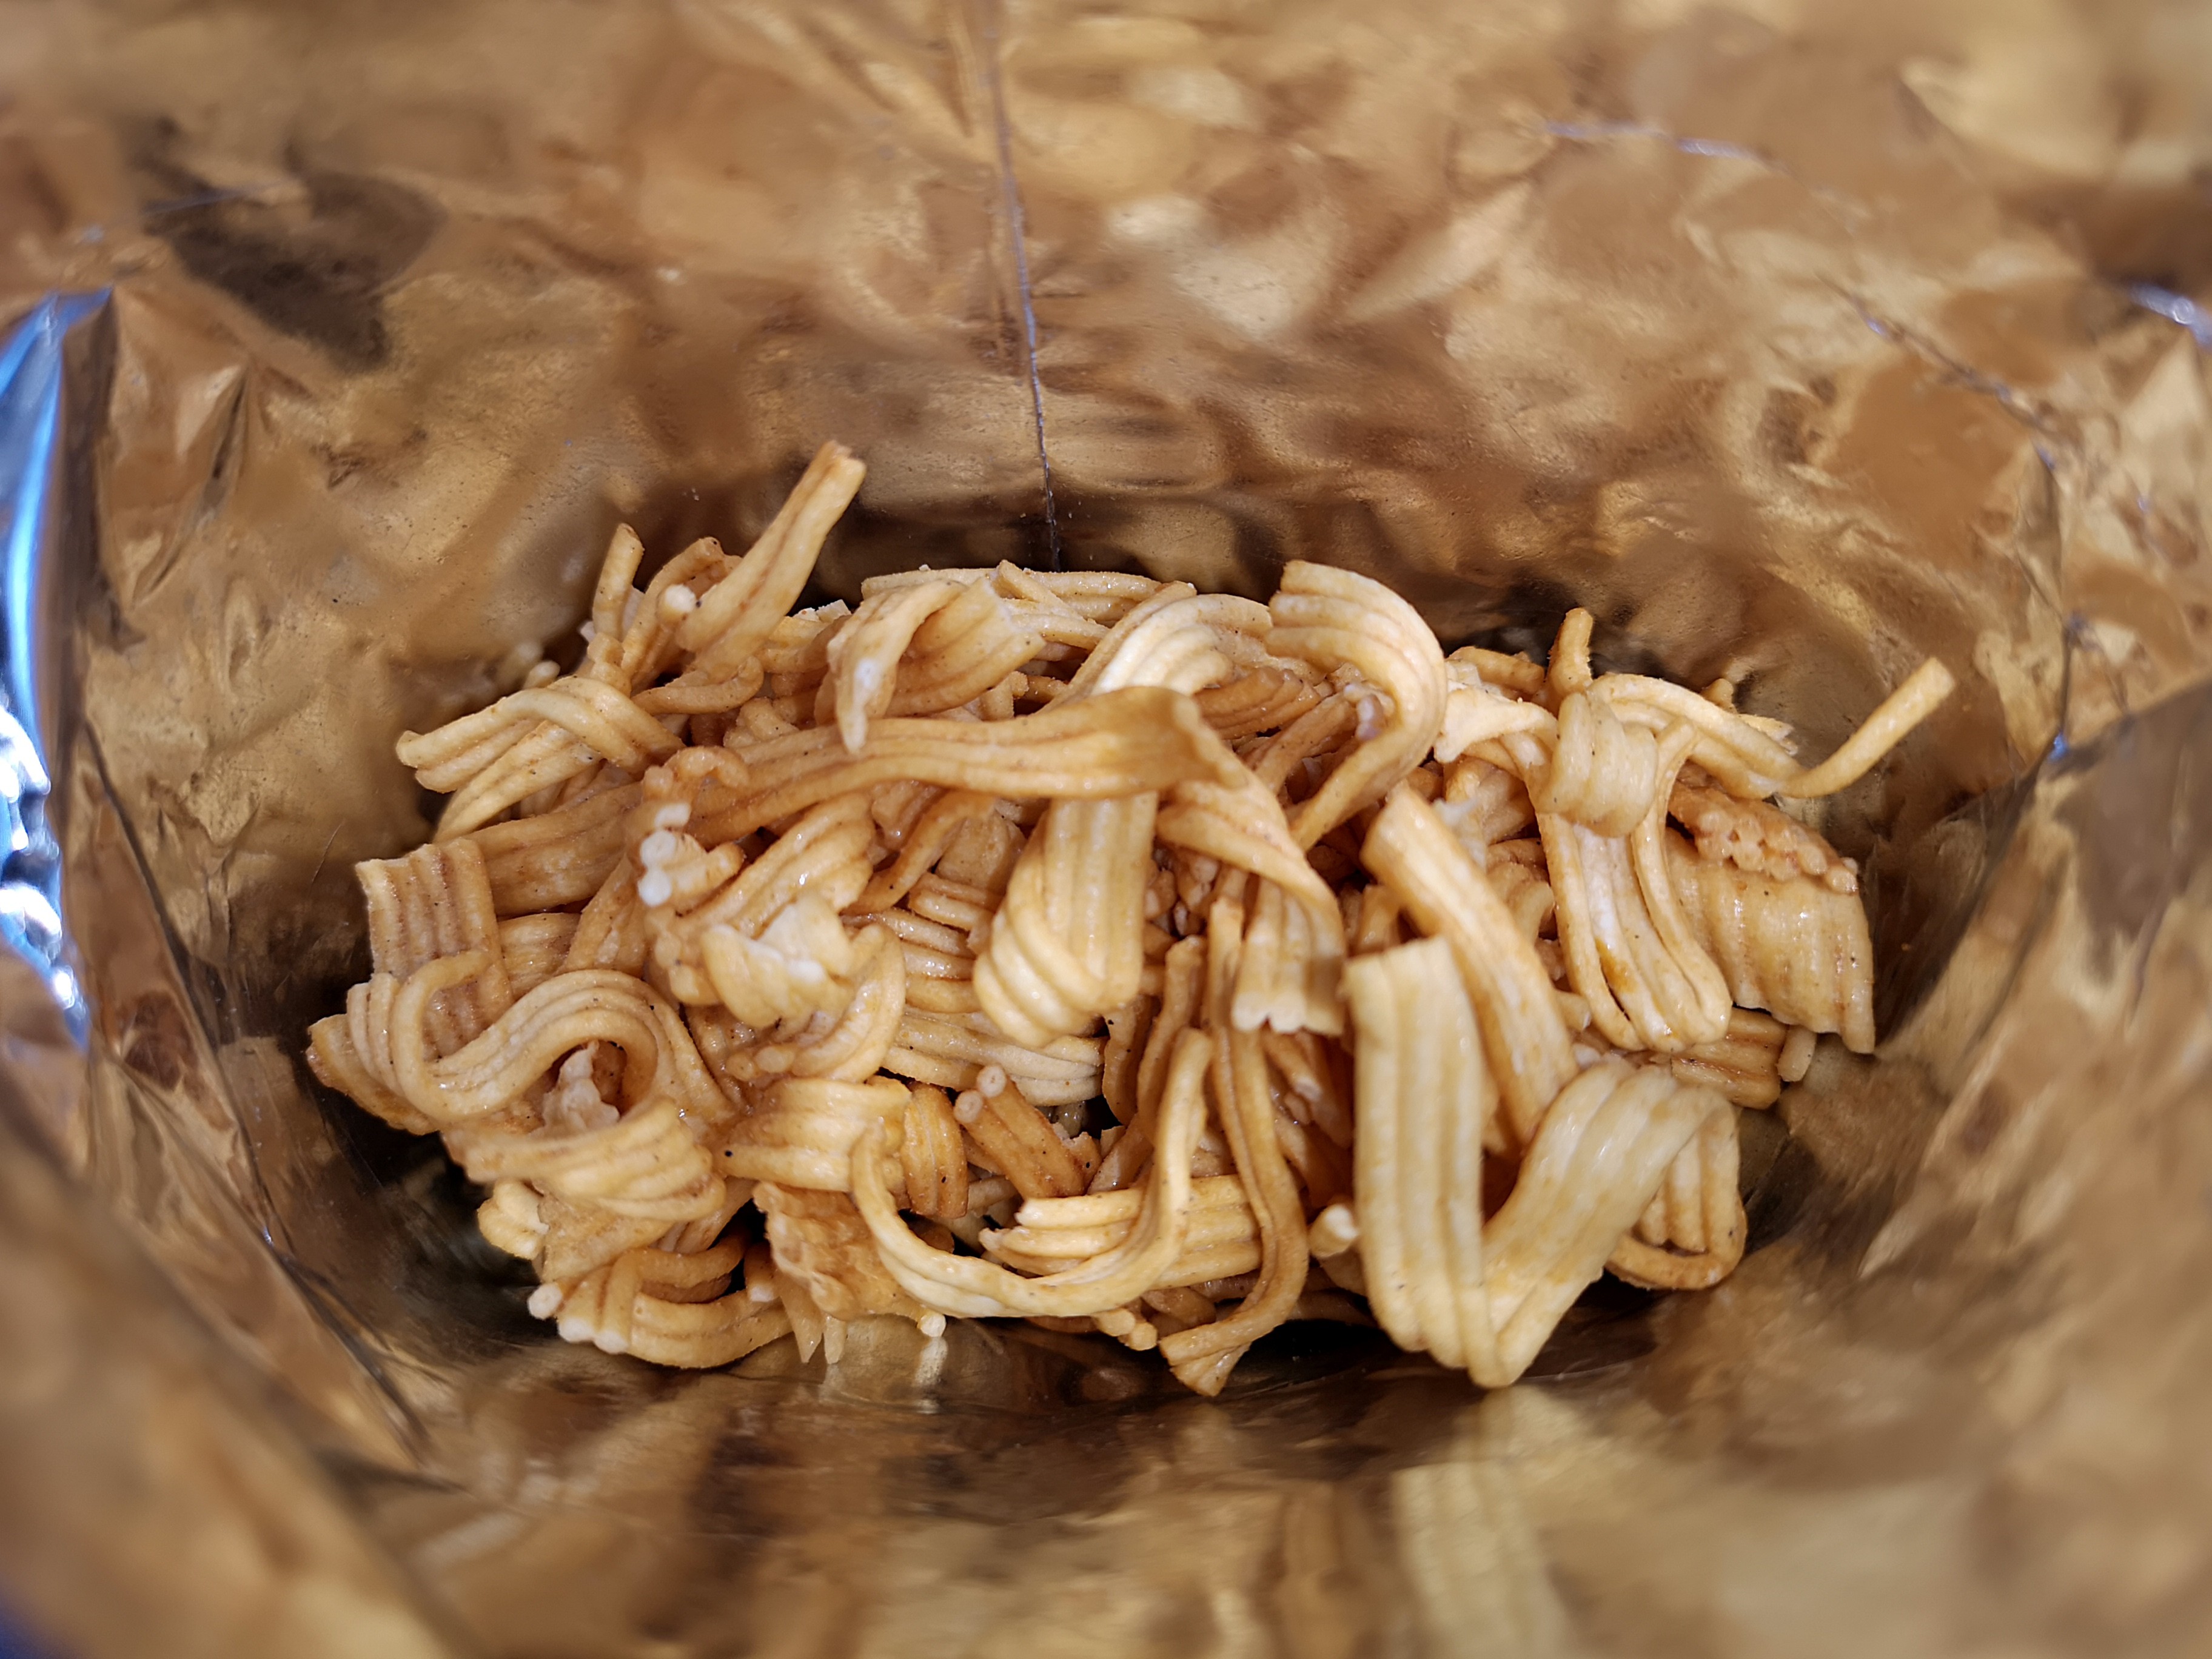 #2291: Wei Lih "GGE Wheat Crackers Tempura Flavour"